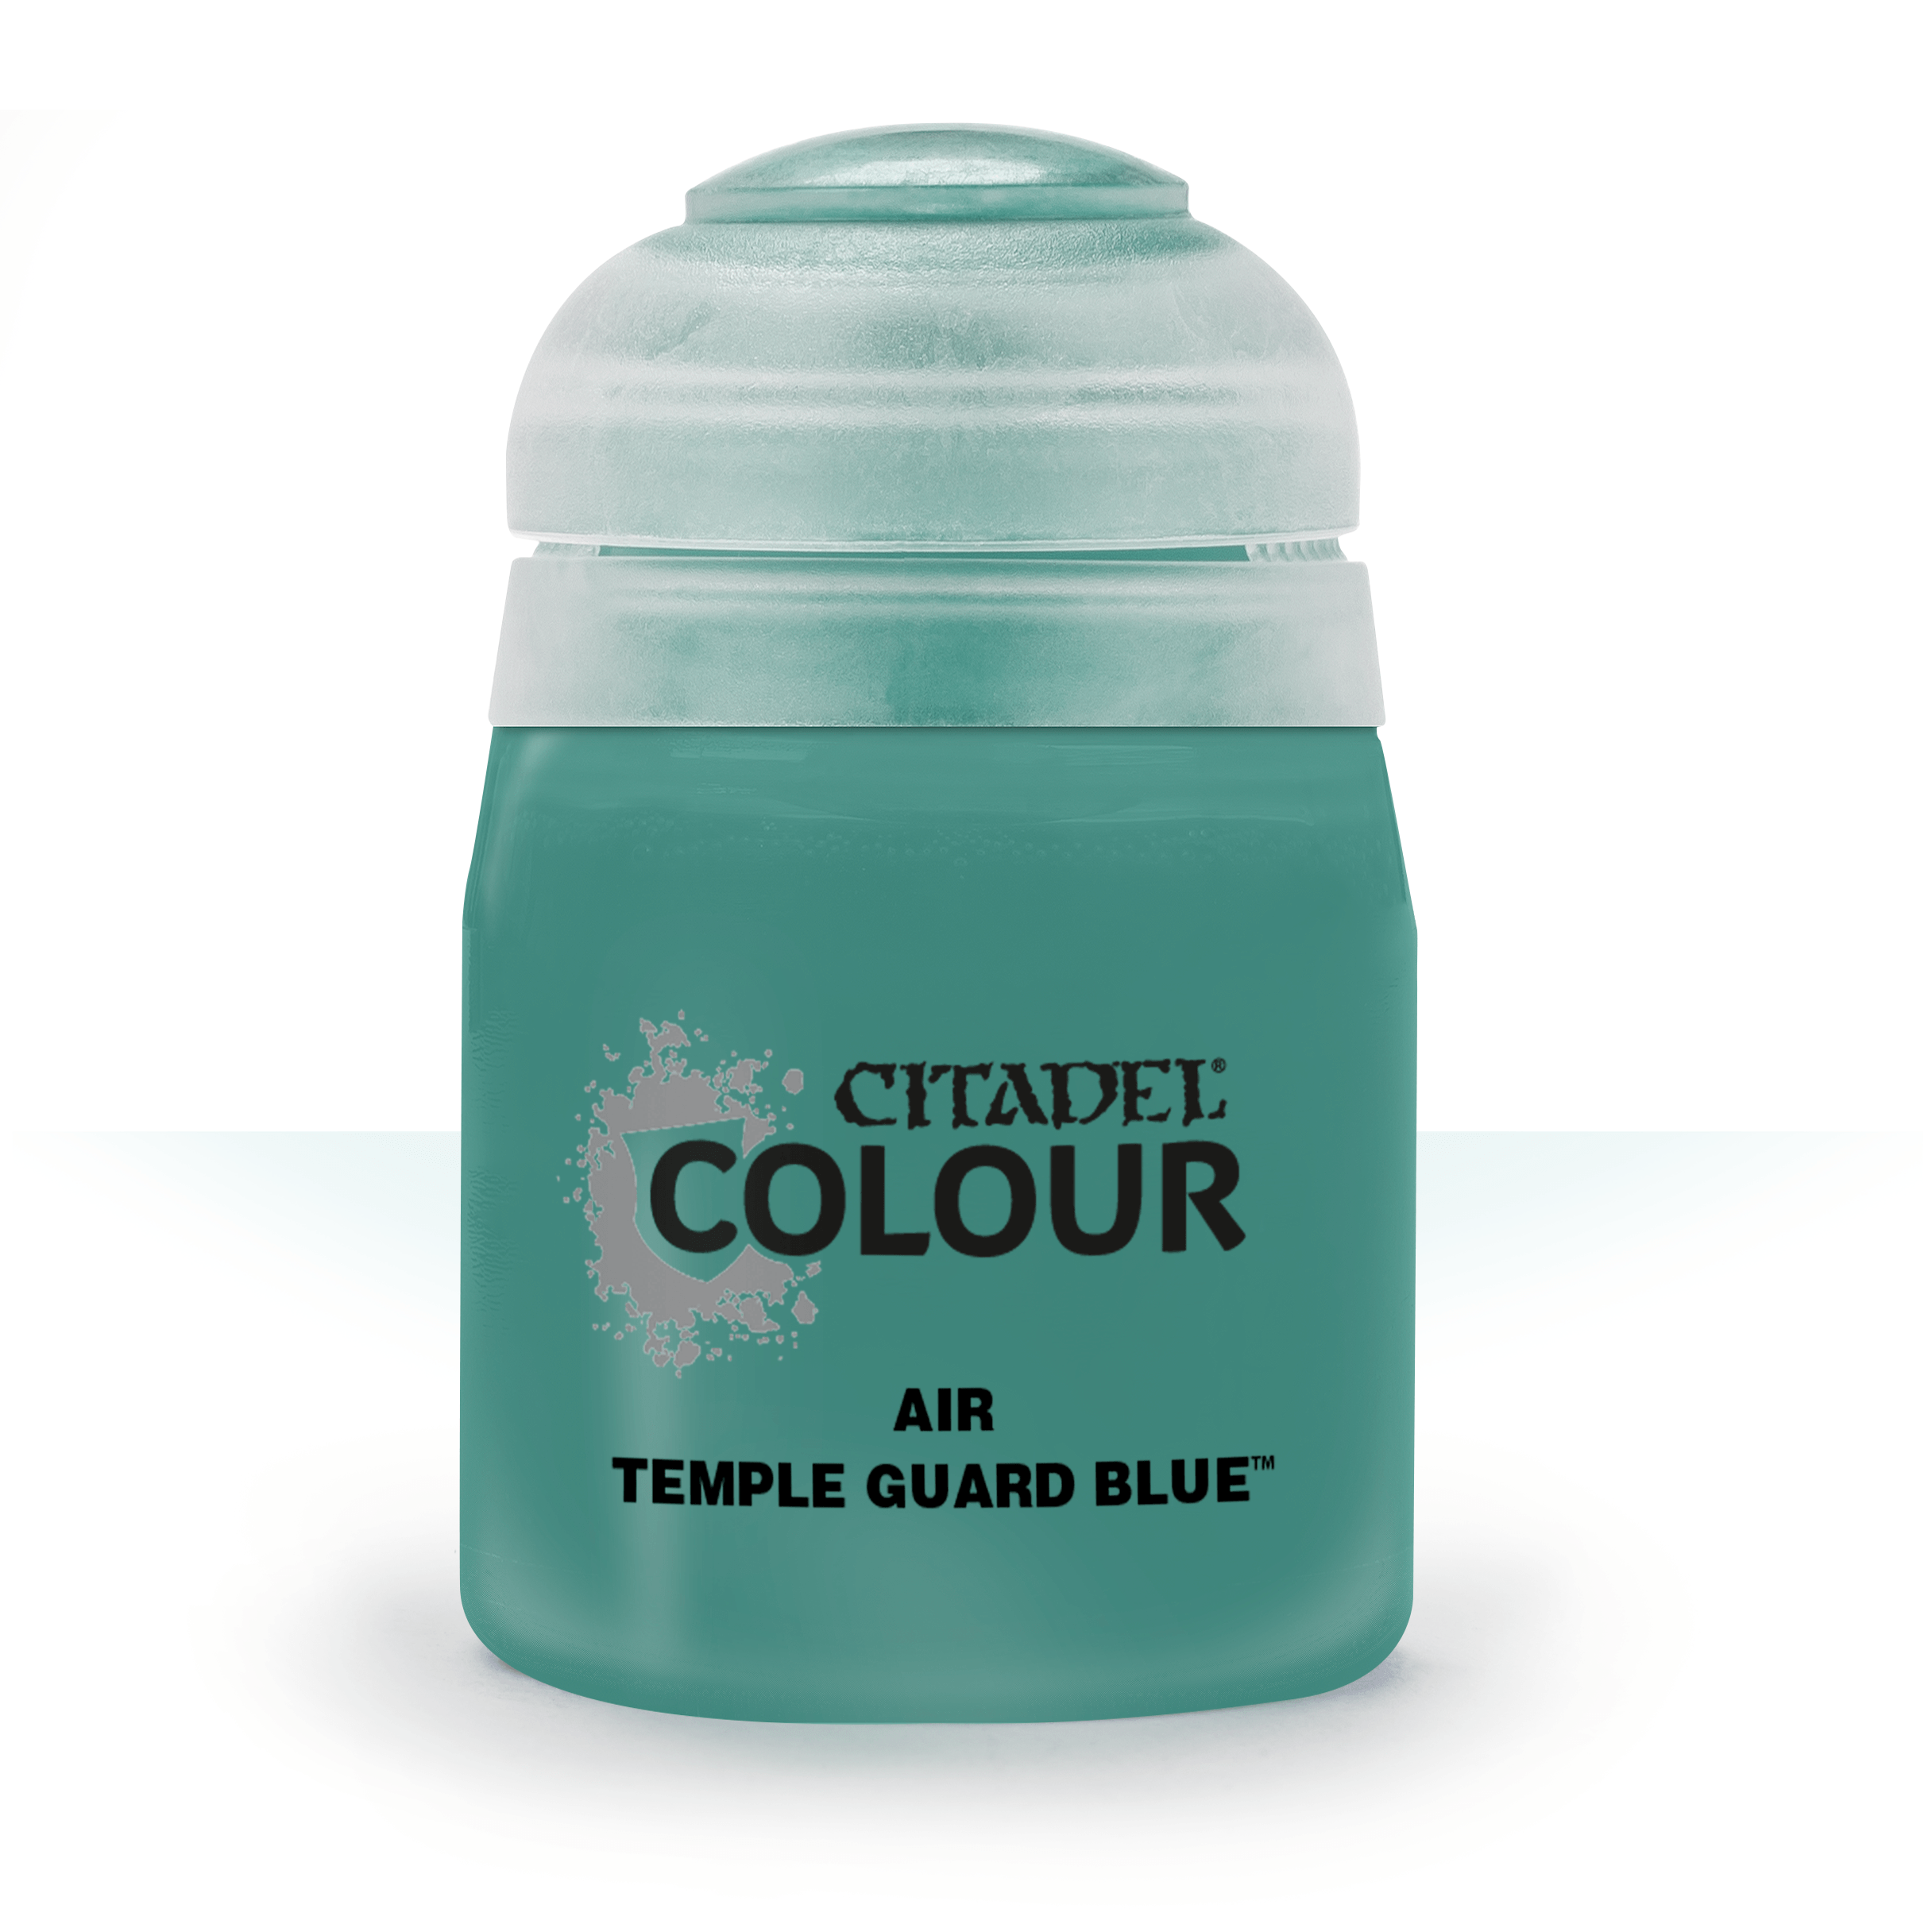 Air Temple Guard Blue - Citadel Colour - 24 ml